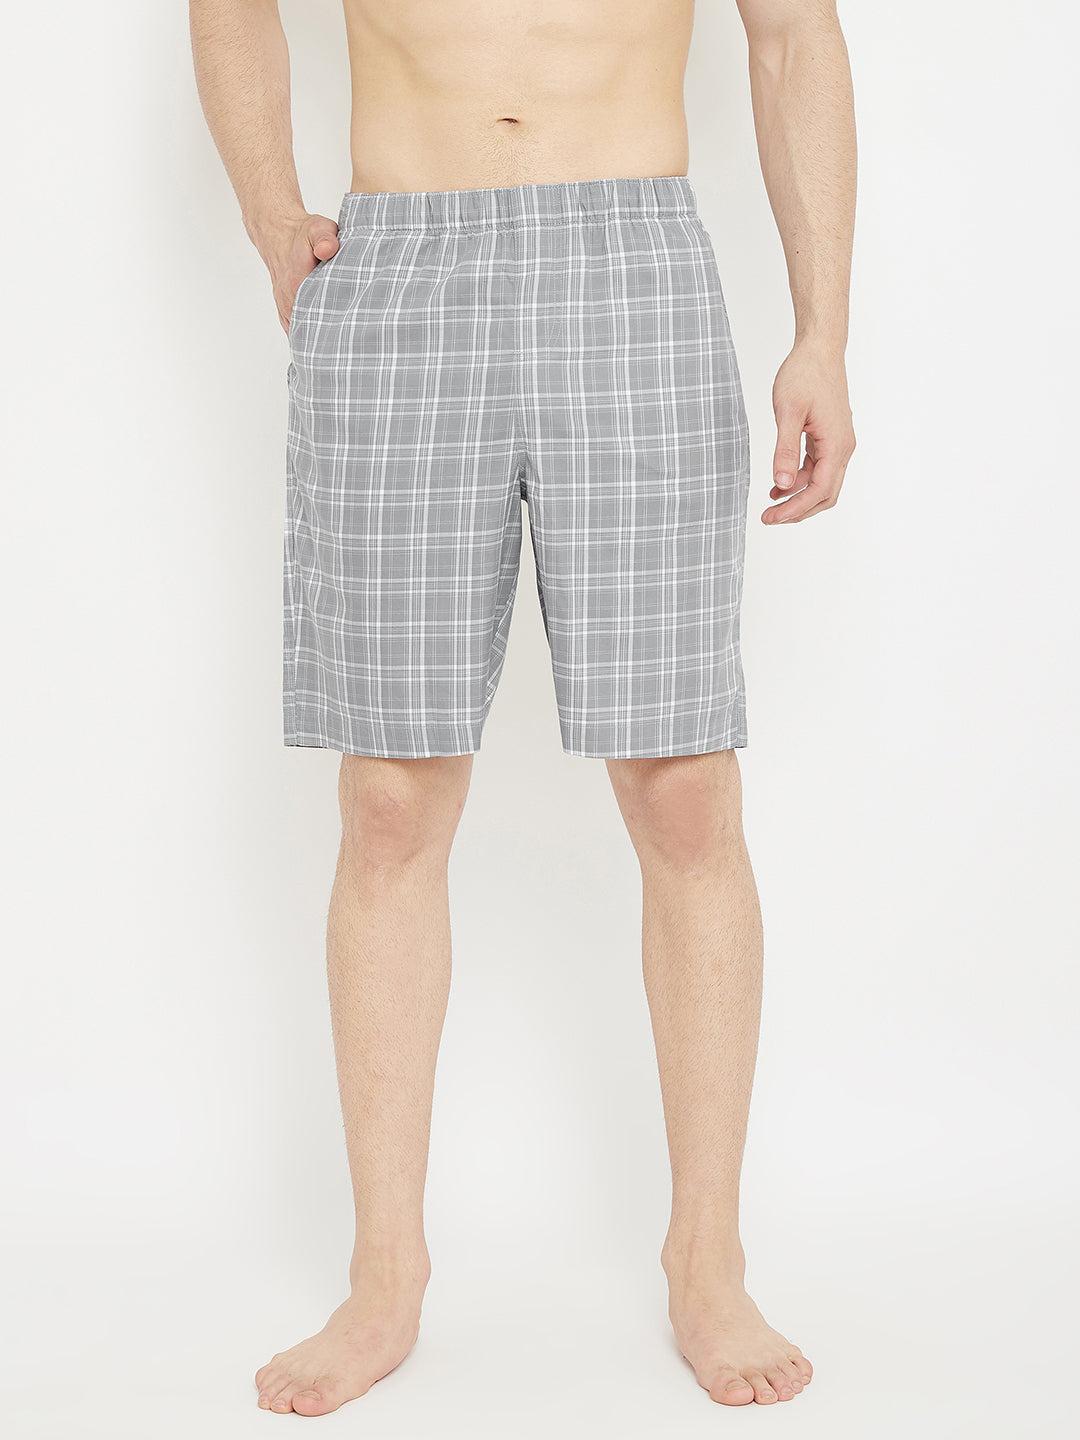 Grey Checked Lounge Shorts - Men Lounge Shorts